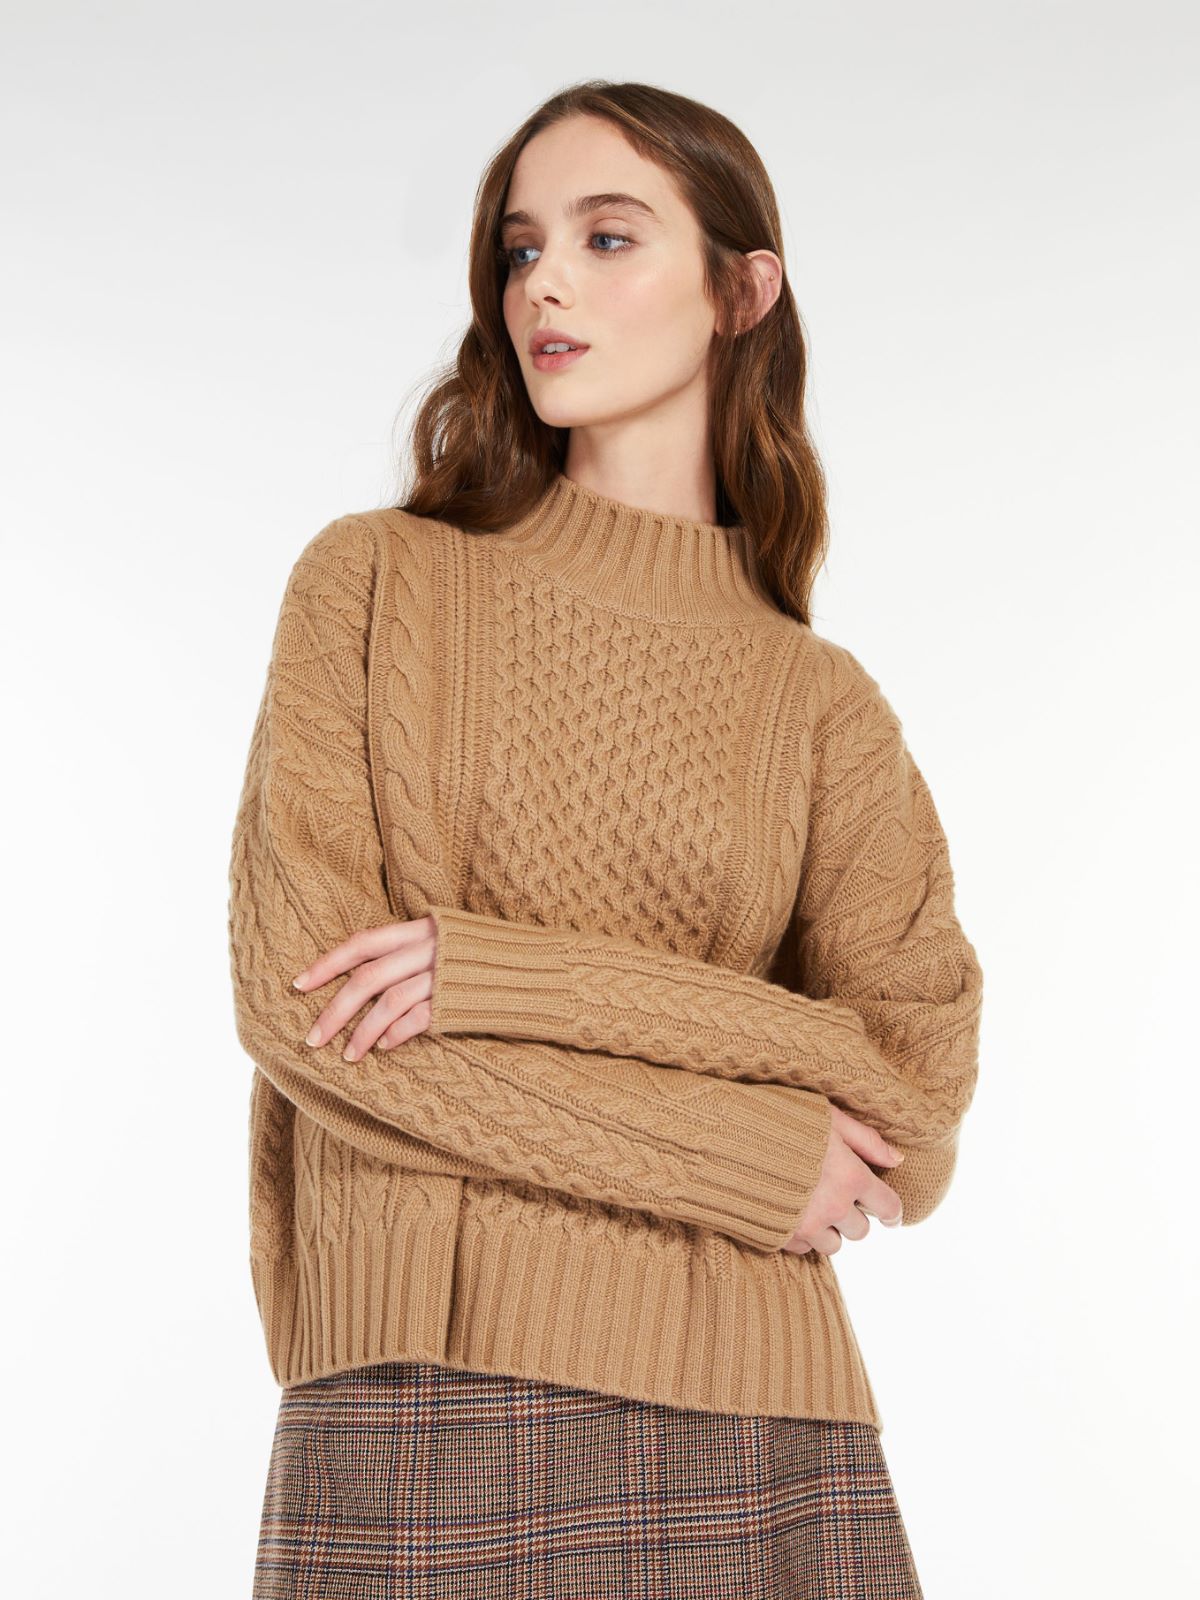 Carded wool yarn sweater - CAMEL - Weekend Max Mara - 4